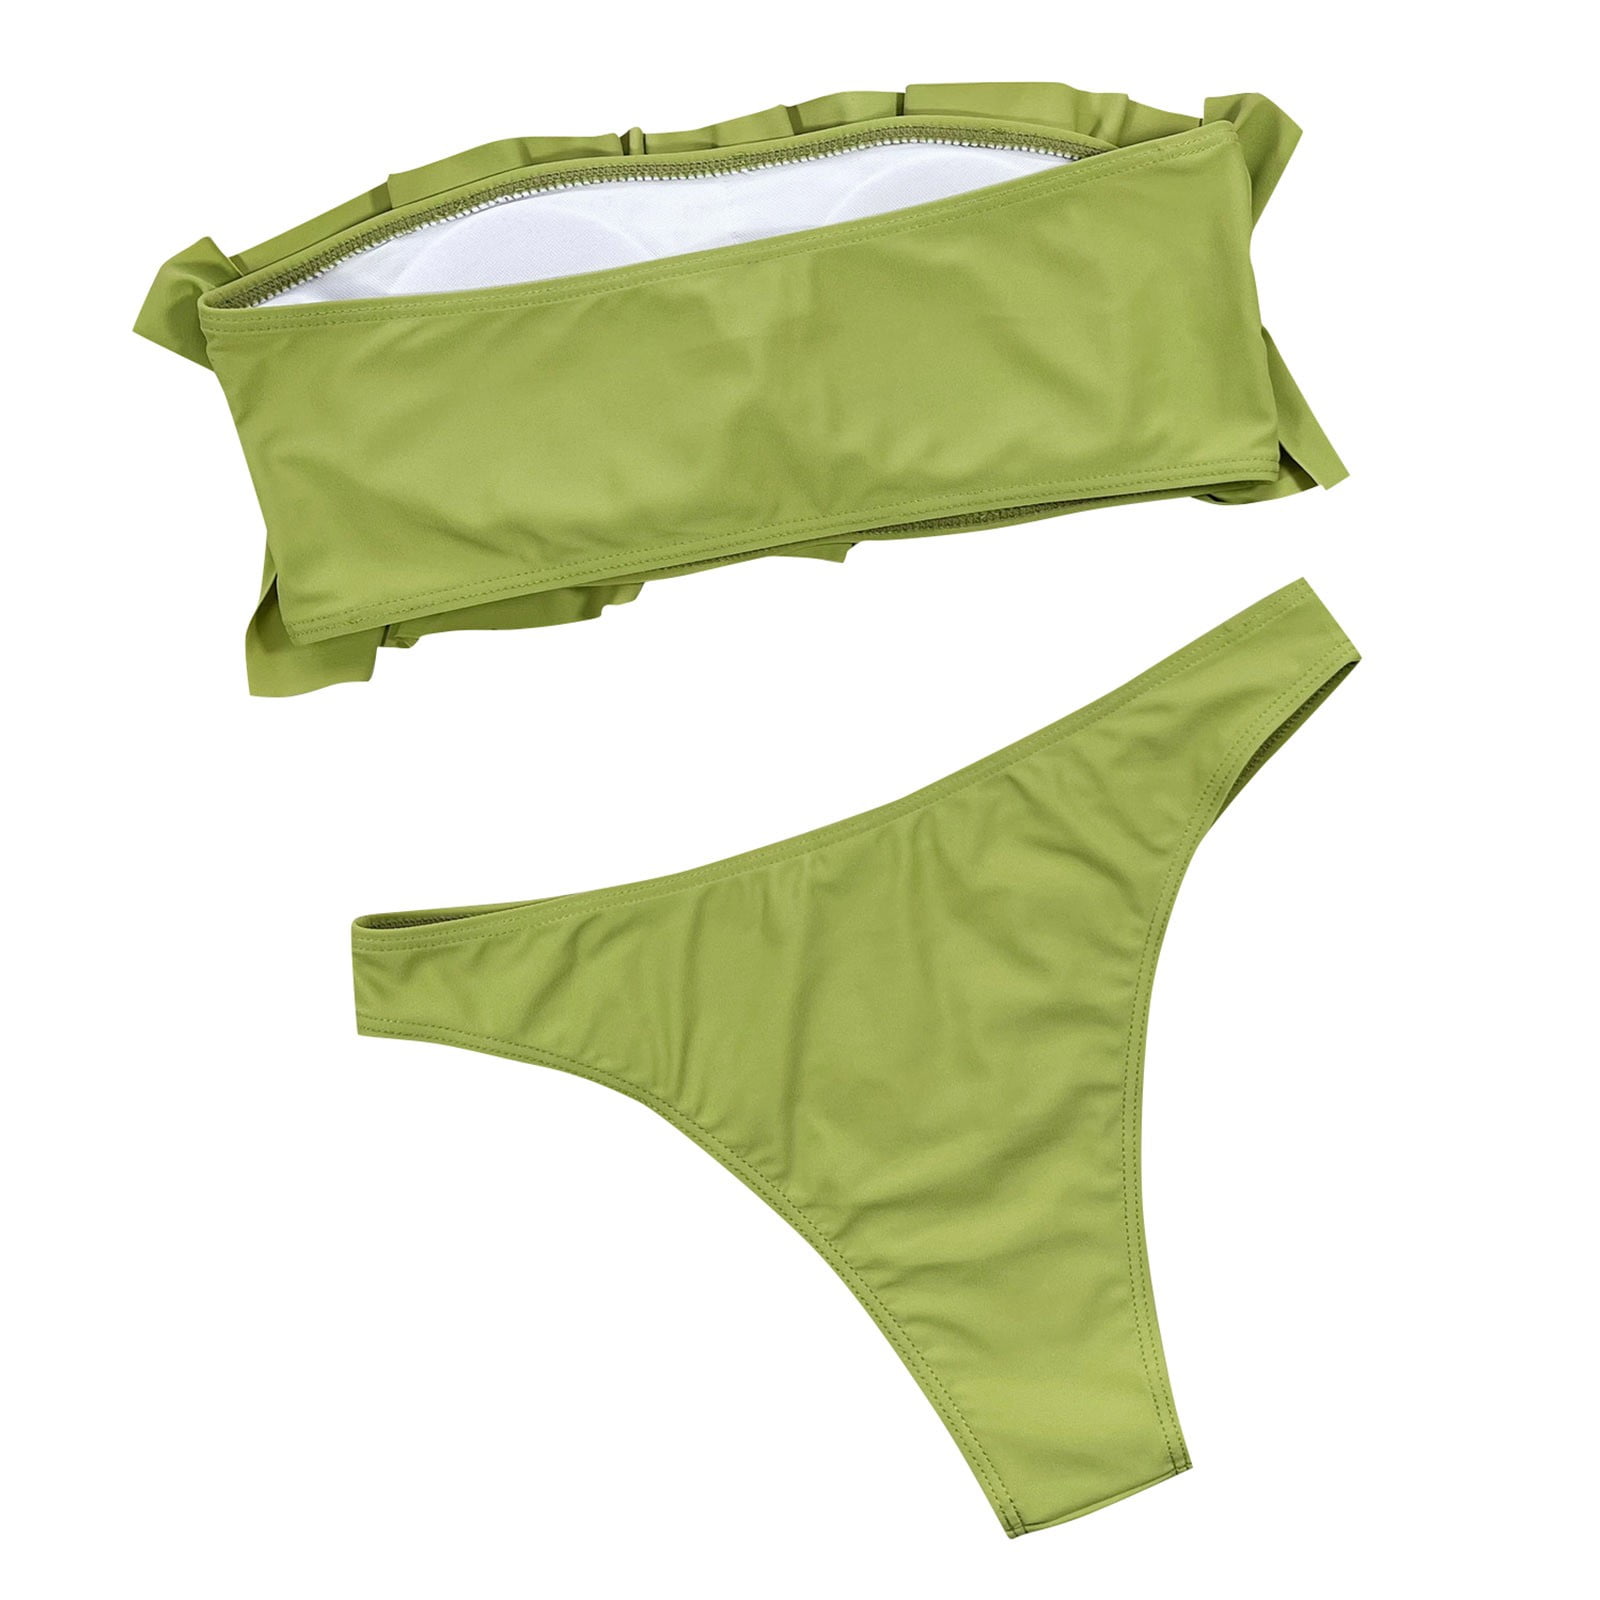 QWERTYU Womens Ruffle Bikini Top Bathing Suit High Cut High Waisted Bikini Bottom Solid Piece Swimsuit Strapless Sexy Bikini Sets Green M - Walmart.com